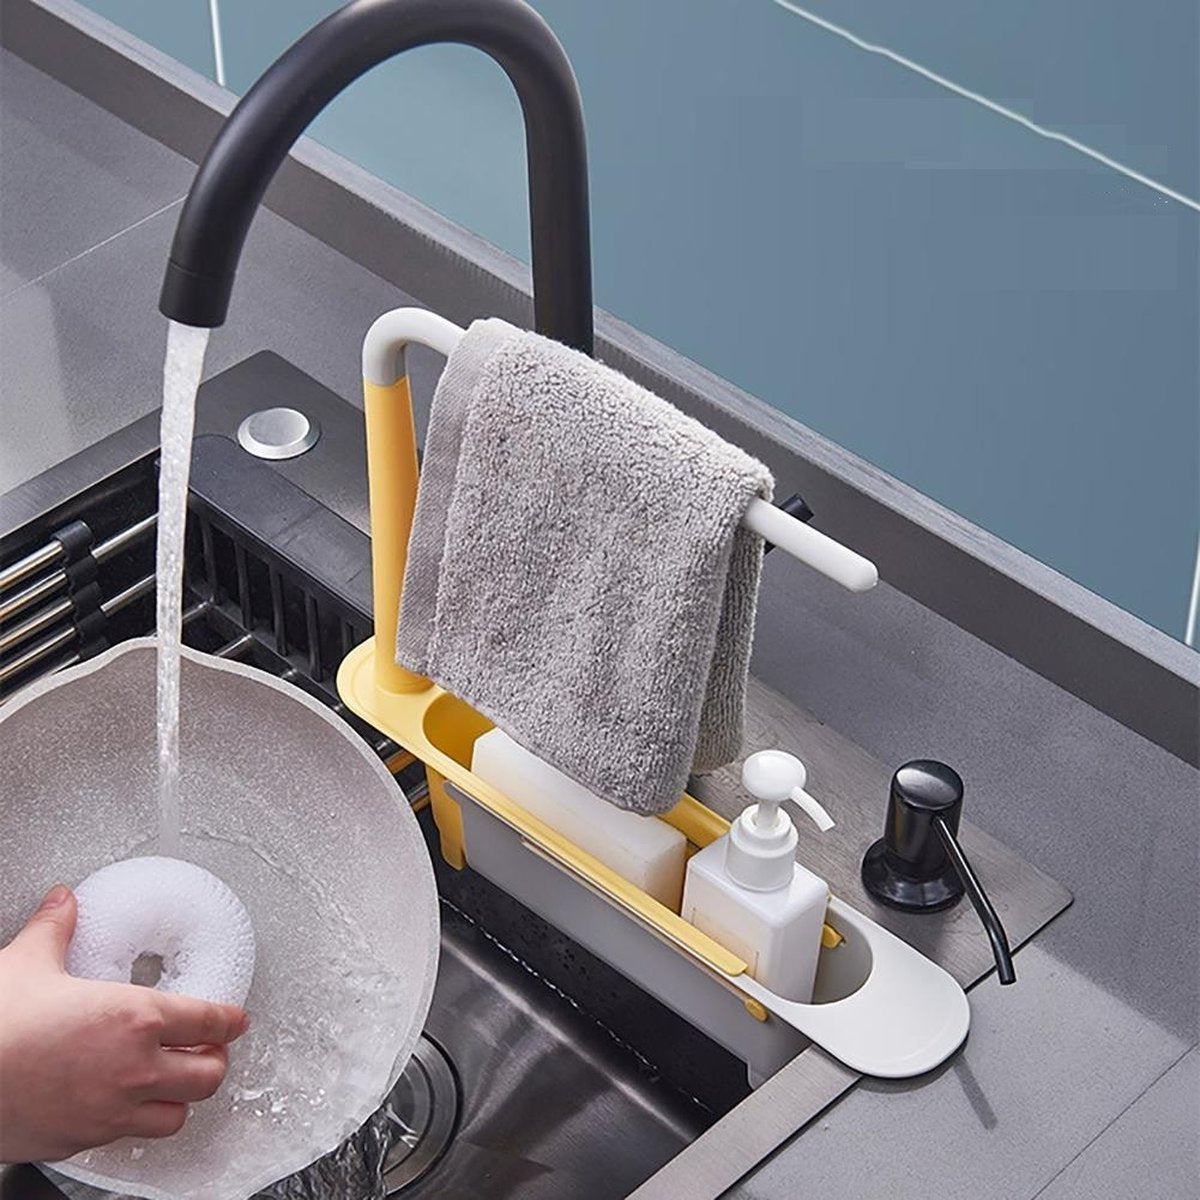 <tc>Ariko</tc> Sink Organizer - Countertop Sink Tray - Dishcloth Holder - Sponge Storage Rack - Adjustable - Yellow/White